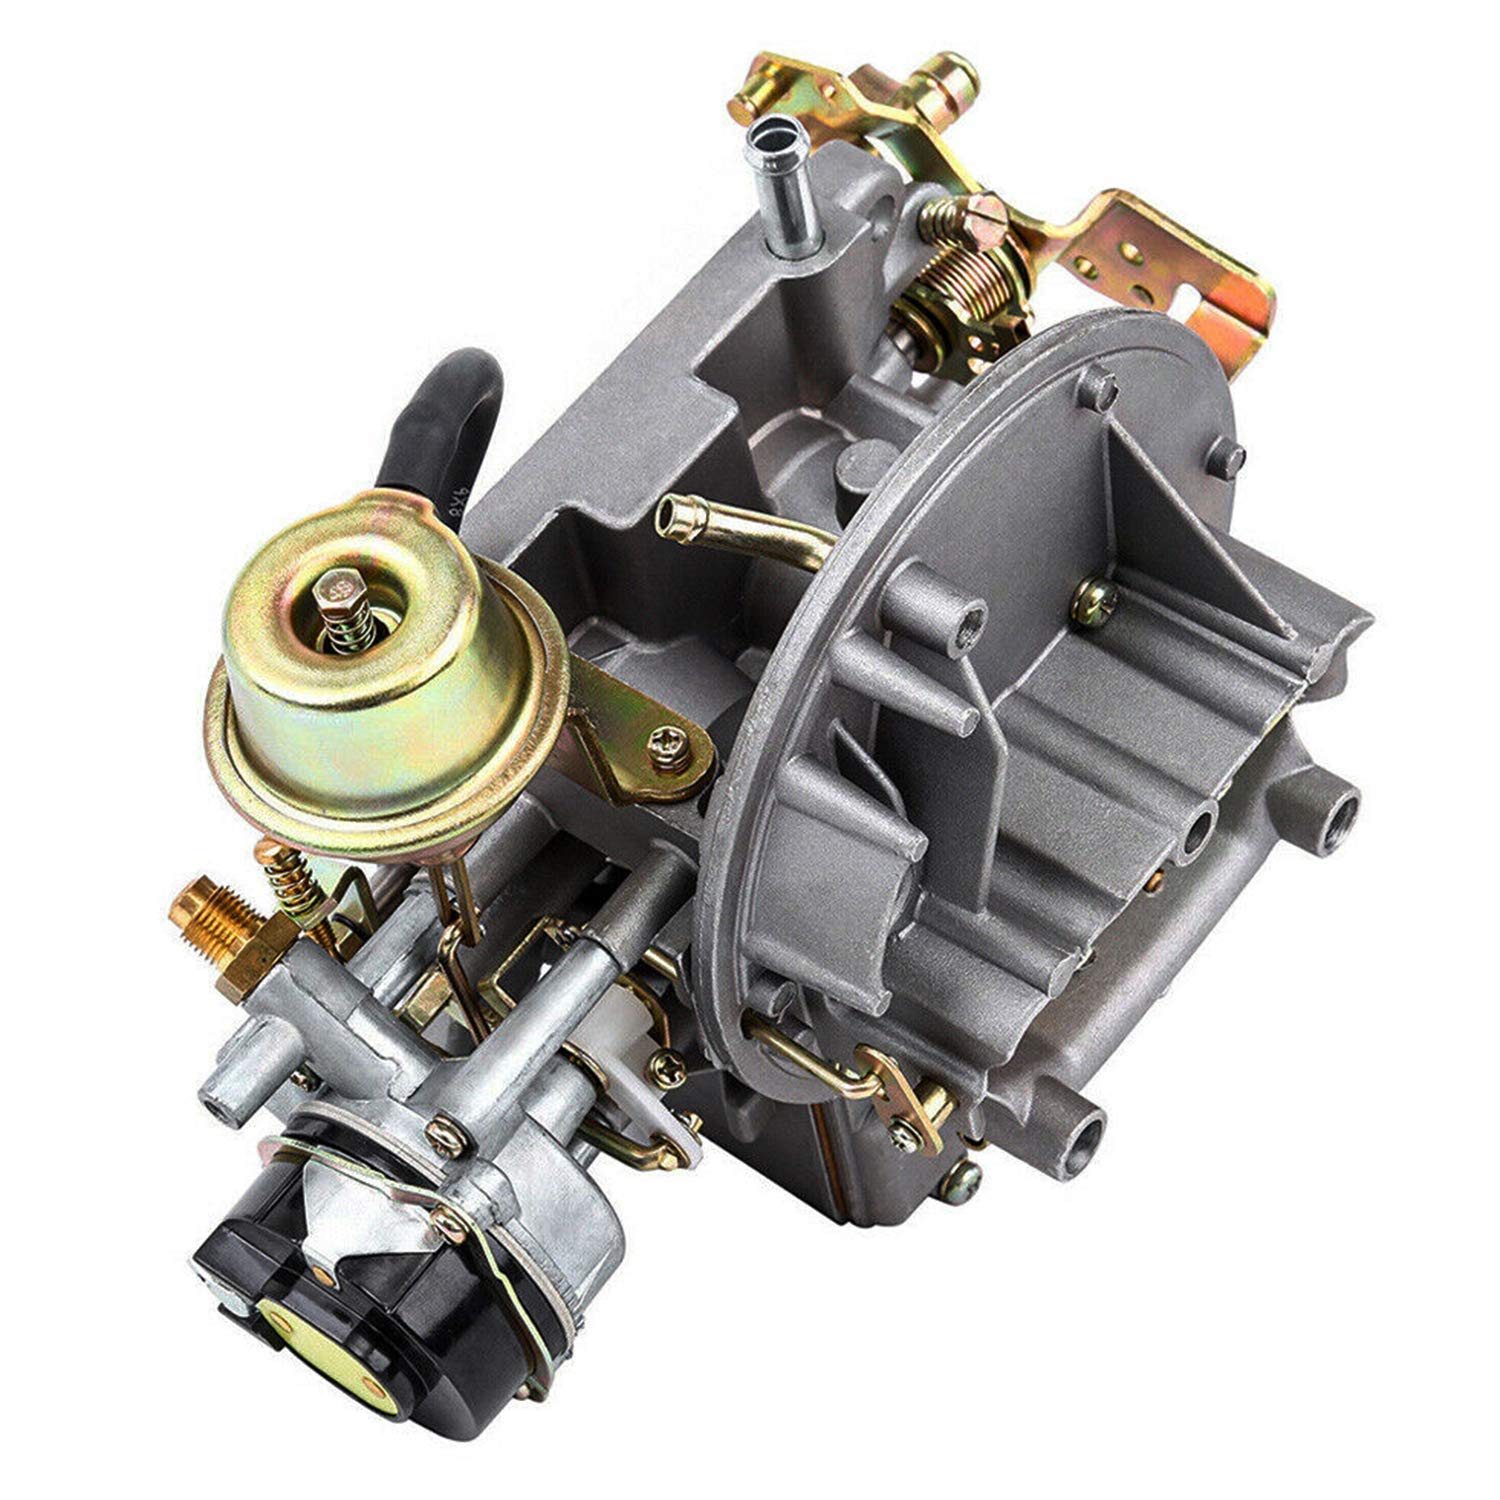 Carburetor 2100 2150 A800 2 Barrel Carburetor Compatible with Jeep Engine F100 F250 F350 360 Cu ,Compatible with Ford 289 302 351Cu With Electric Choke Mounting Gasket